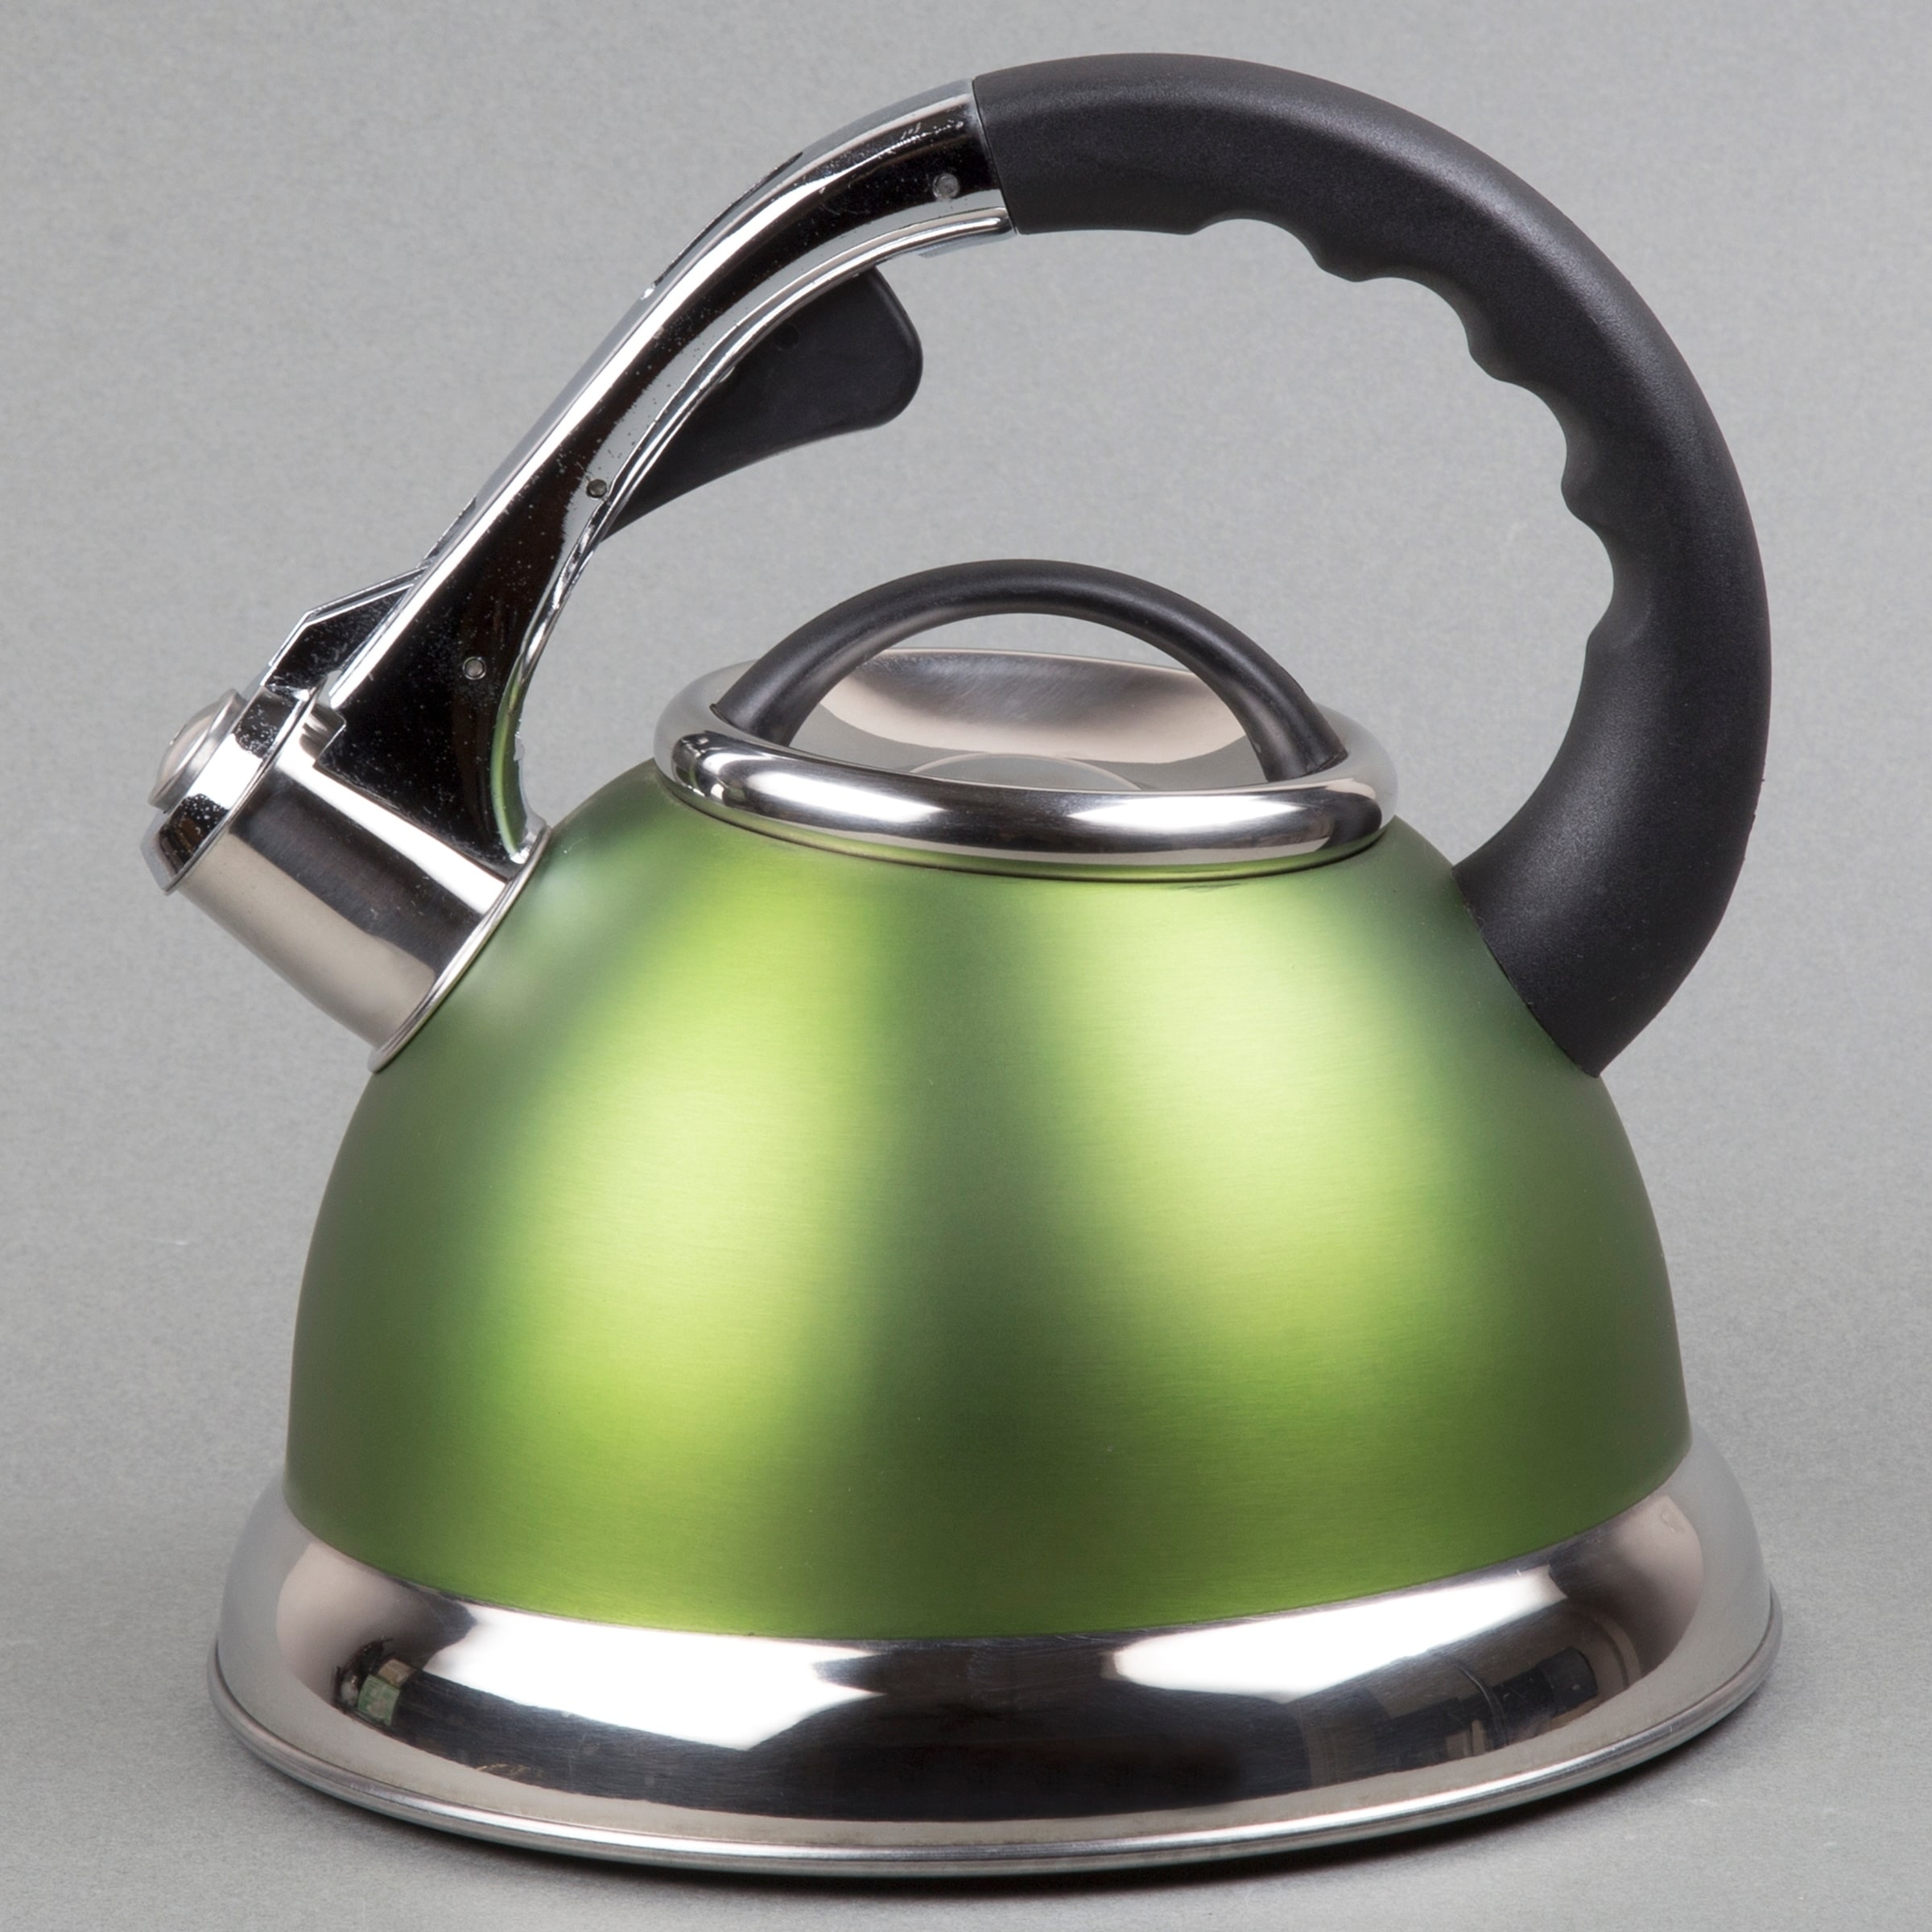 Whistling Tea Kettle, Stainless Steel Tea Kettle, Non-Toxic